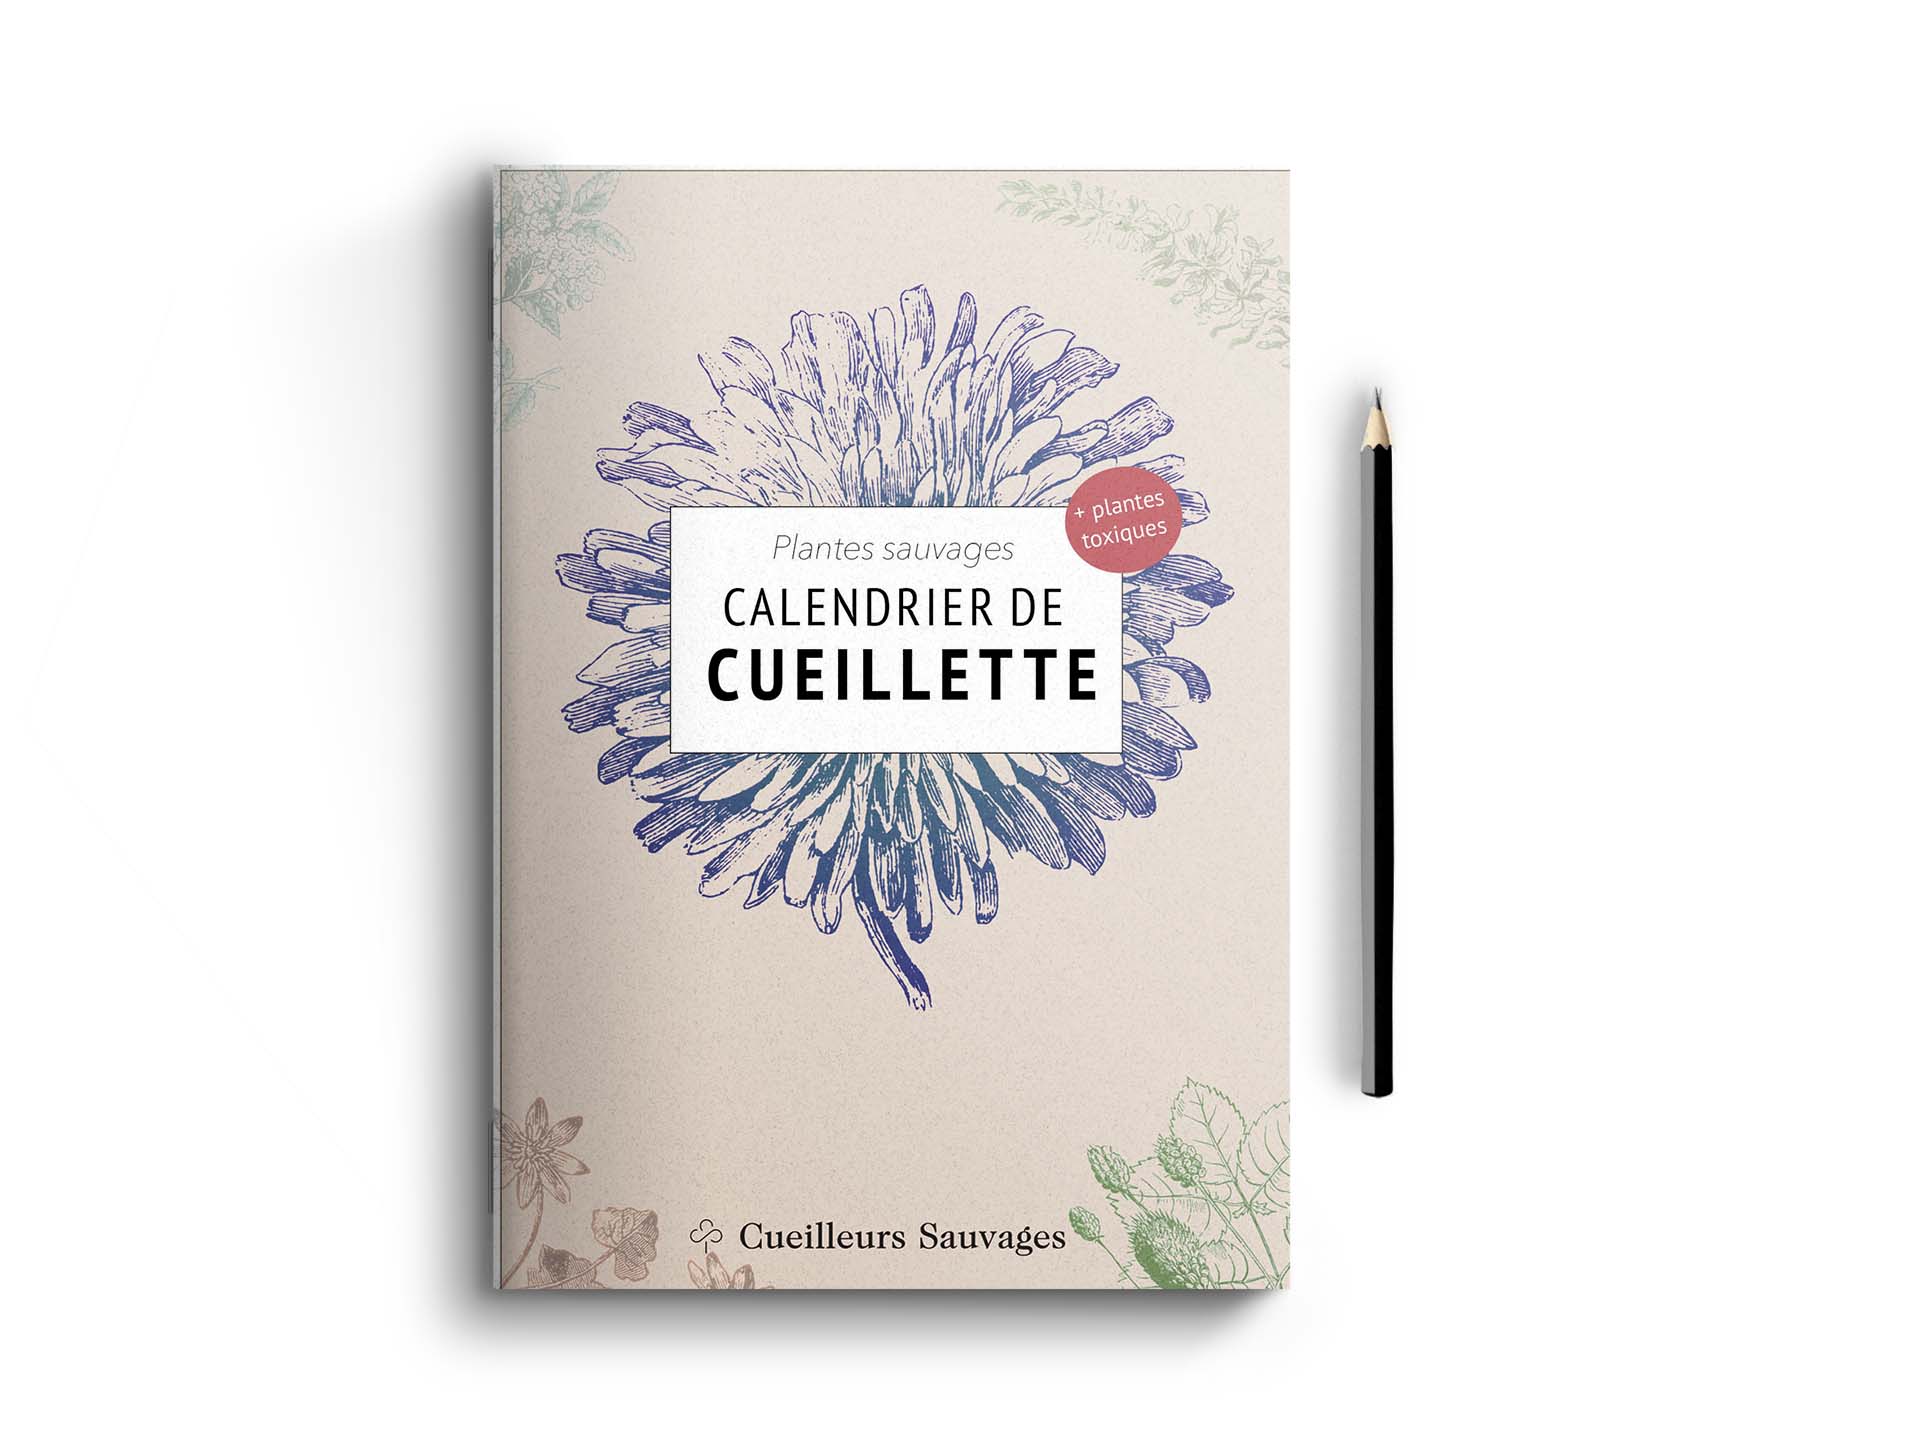 Featured image for “Calendrier de cueillette”